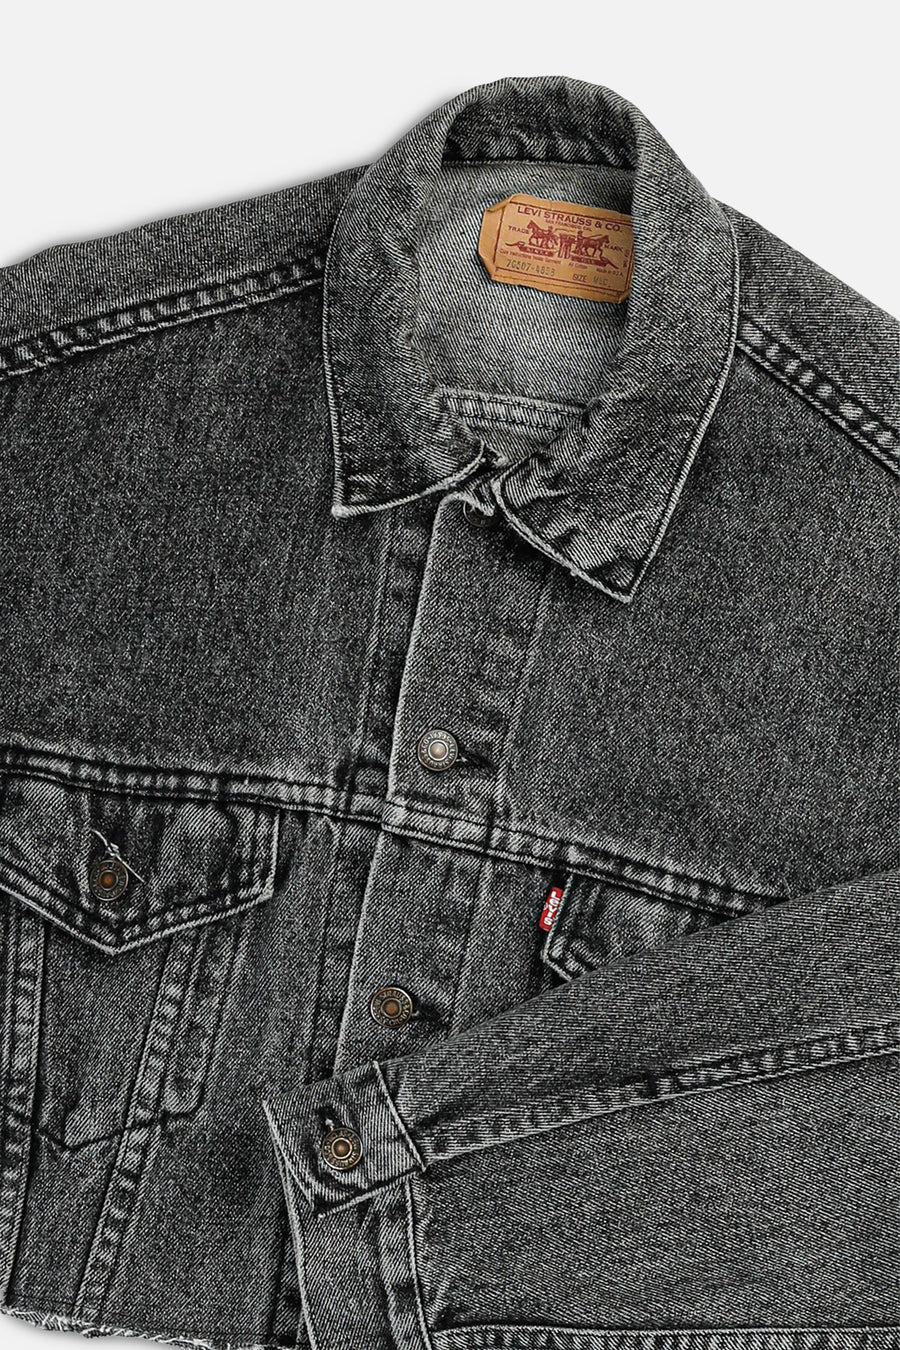 Rework Vintage Levi's USA Crop Denim Jacket - M